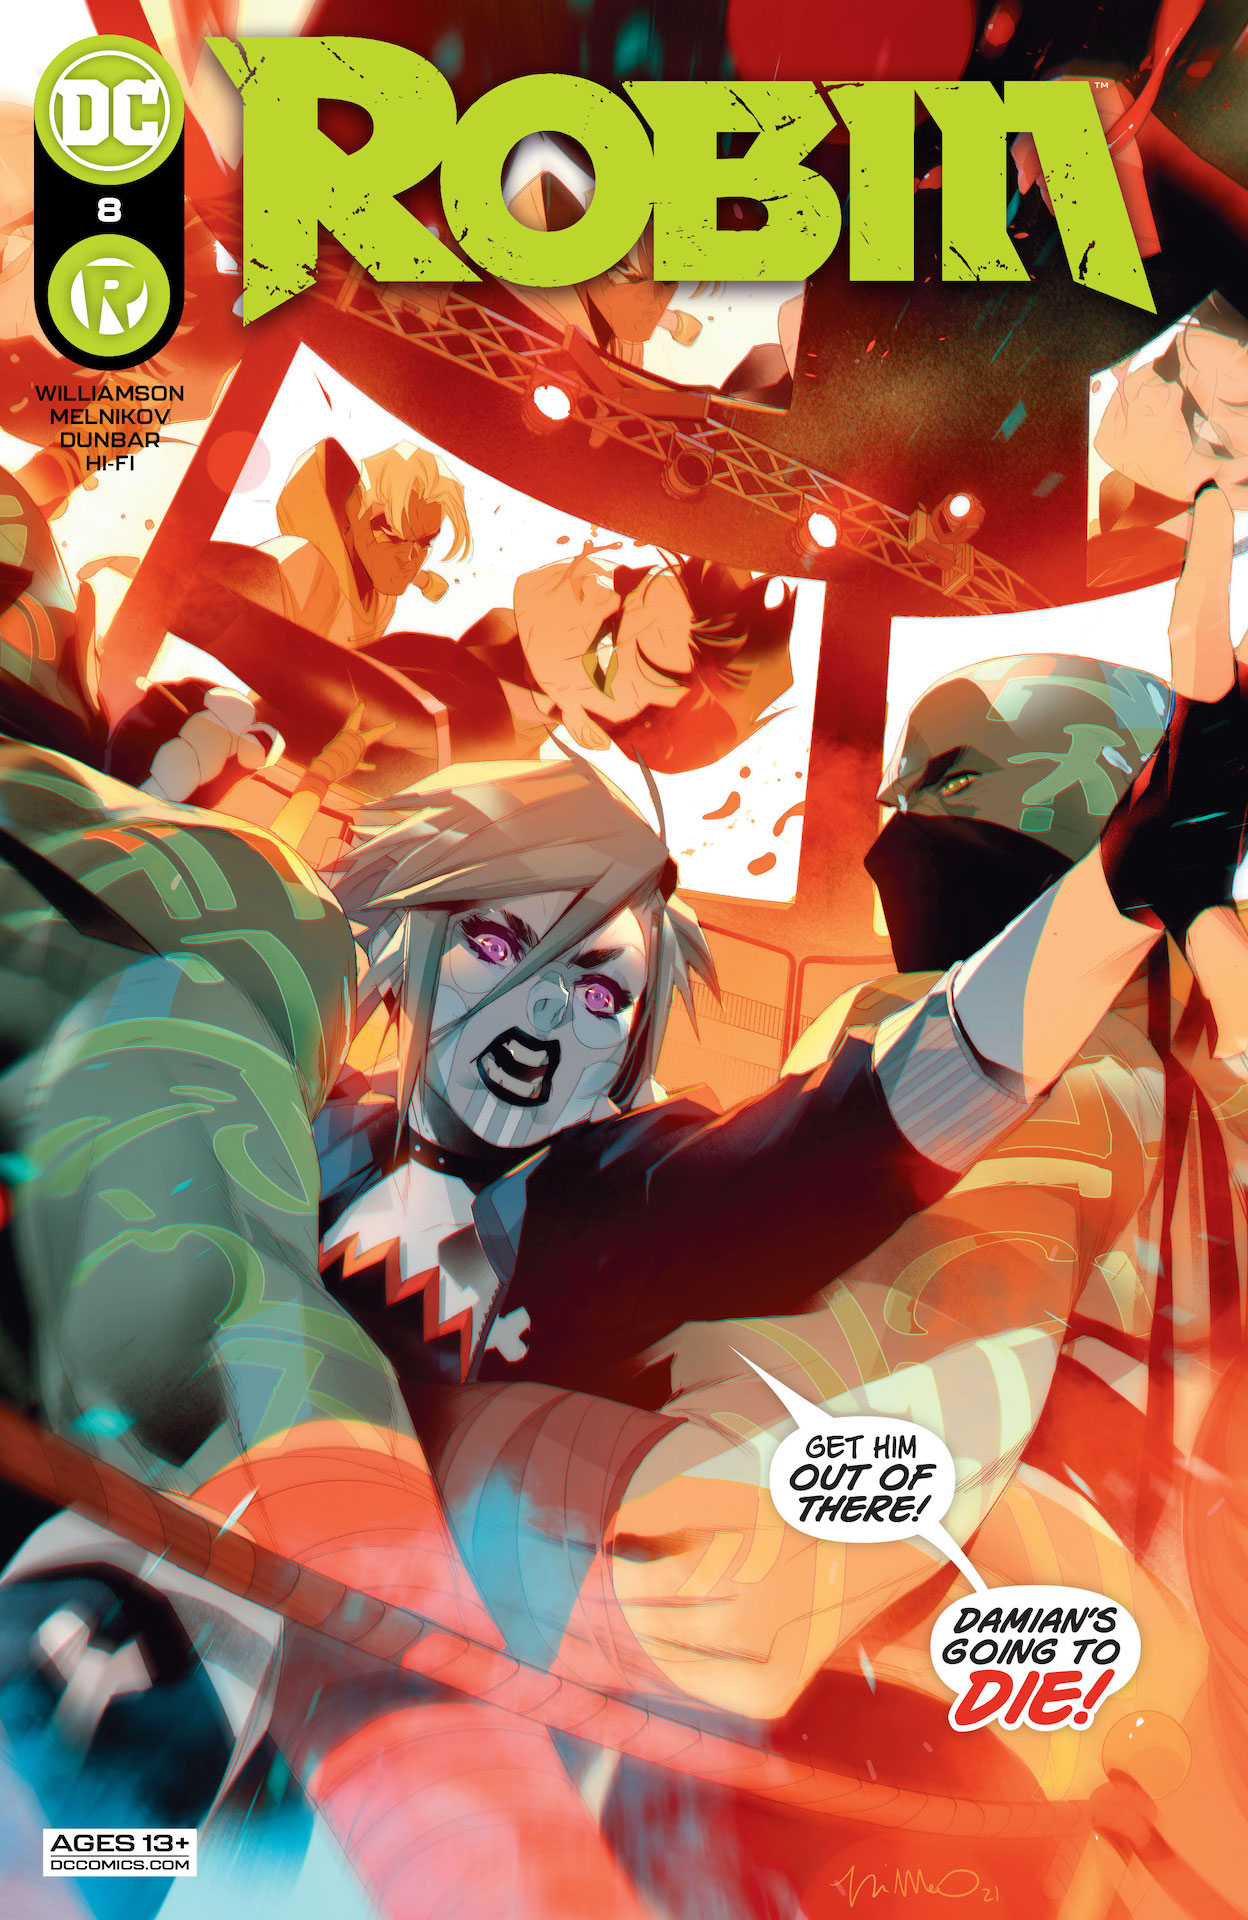 DC Preview: Robin #8